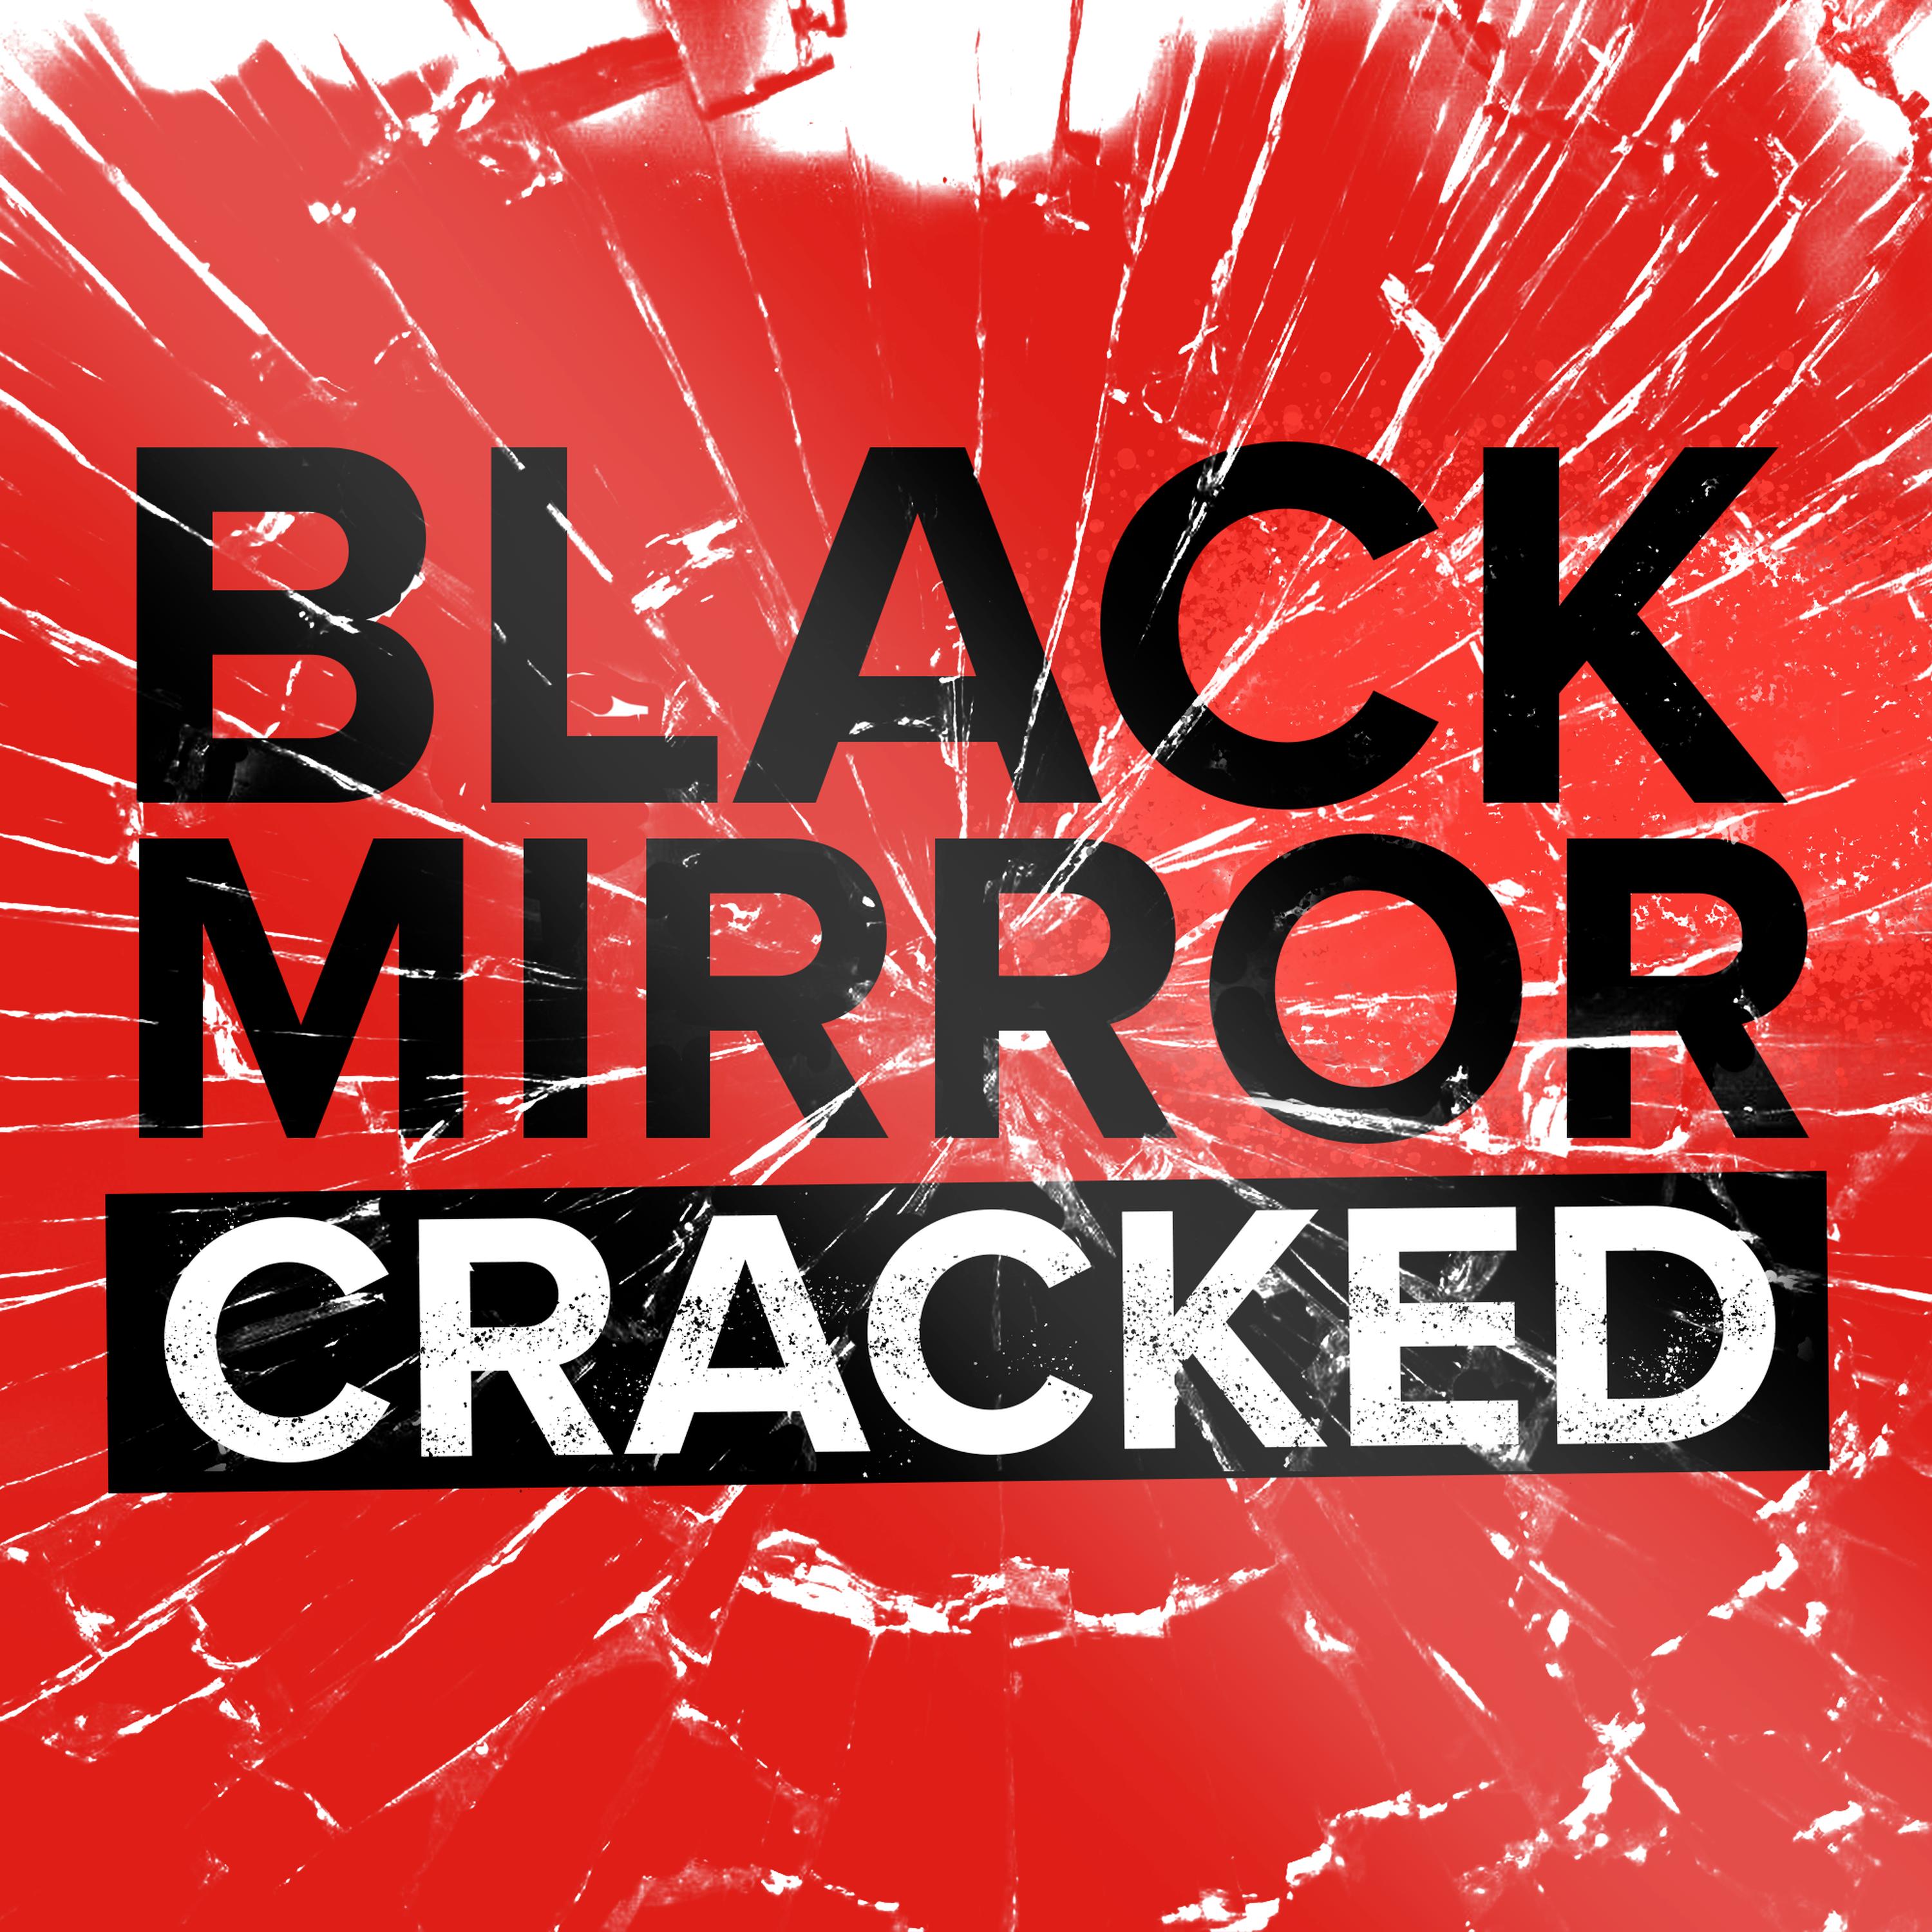 Cracked Mirror. The Black Mirror обложка. Jackson cracked Mirror. Shut up and Dance Black Mirror. Start crack